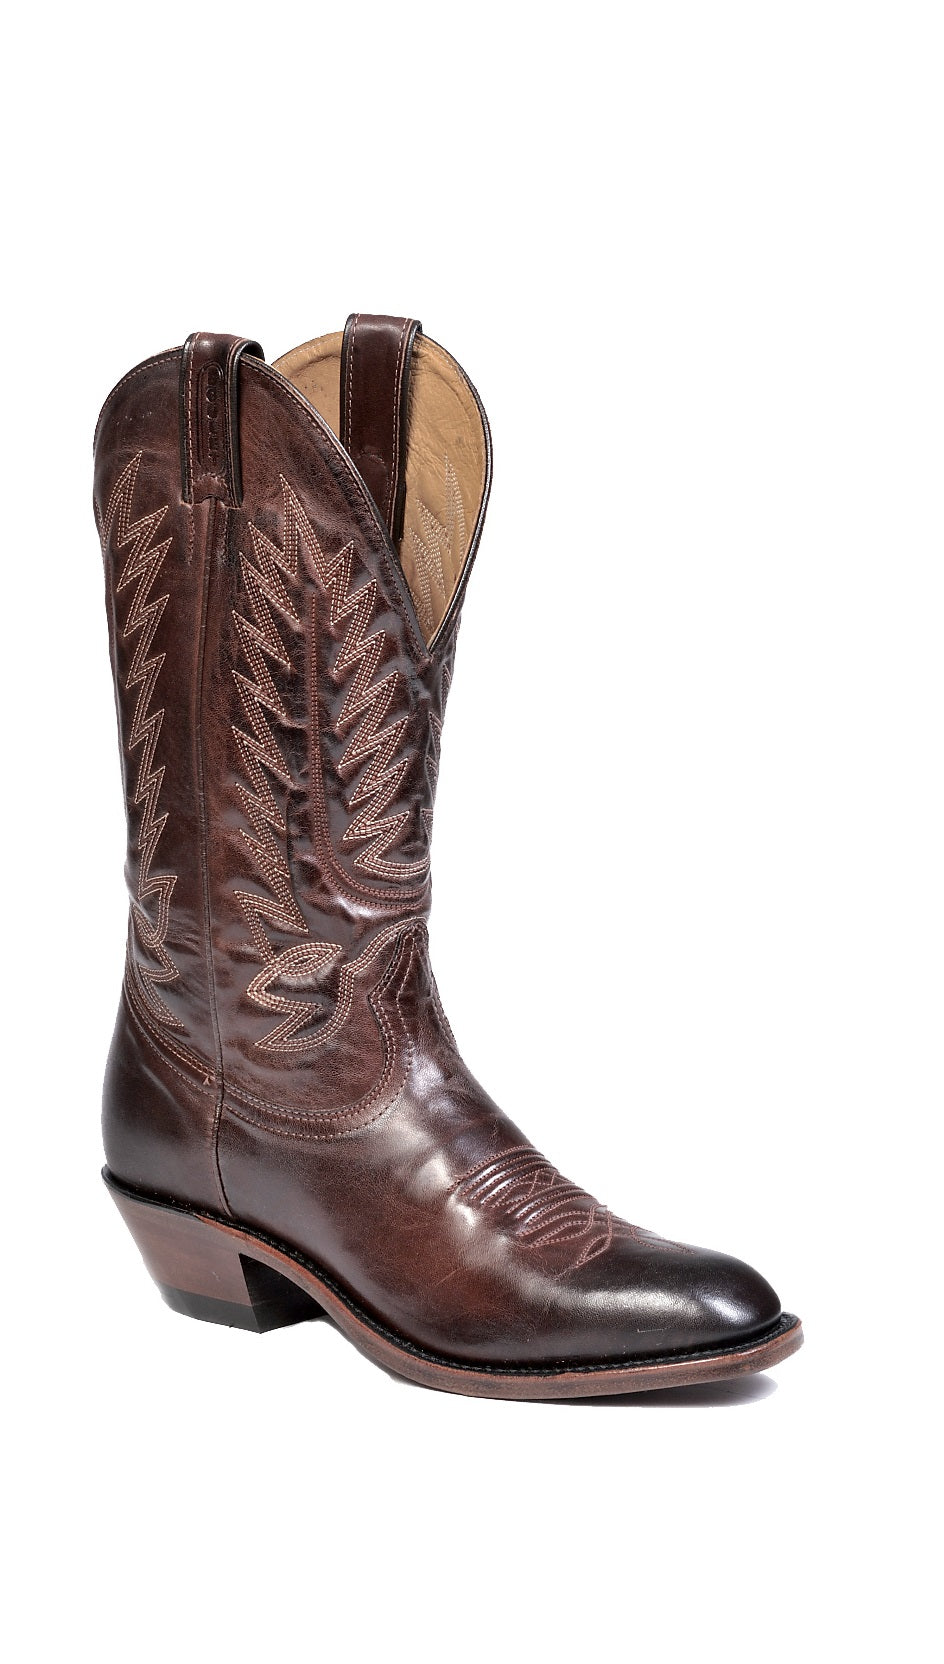 Boot Men's (8064) - 13" Western Toe in Ranch Hand Tan